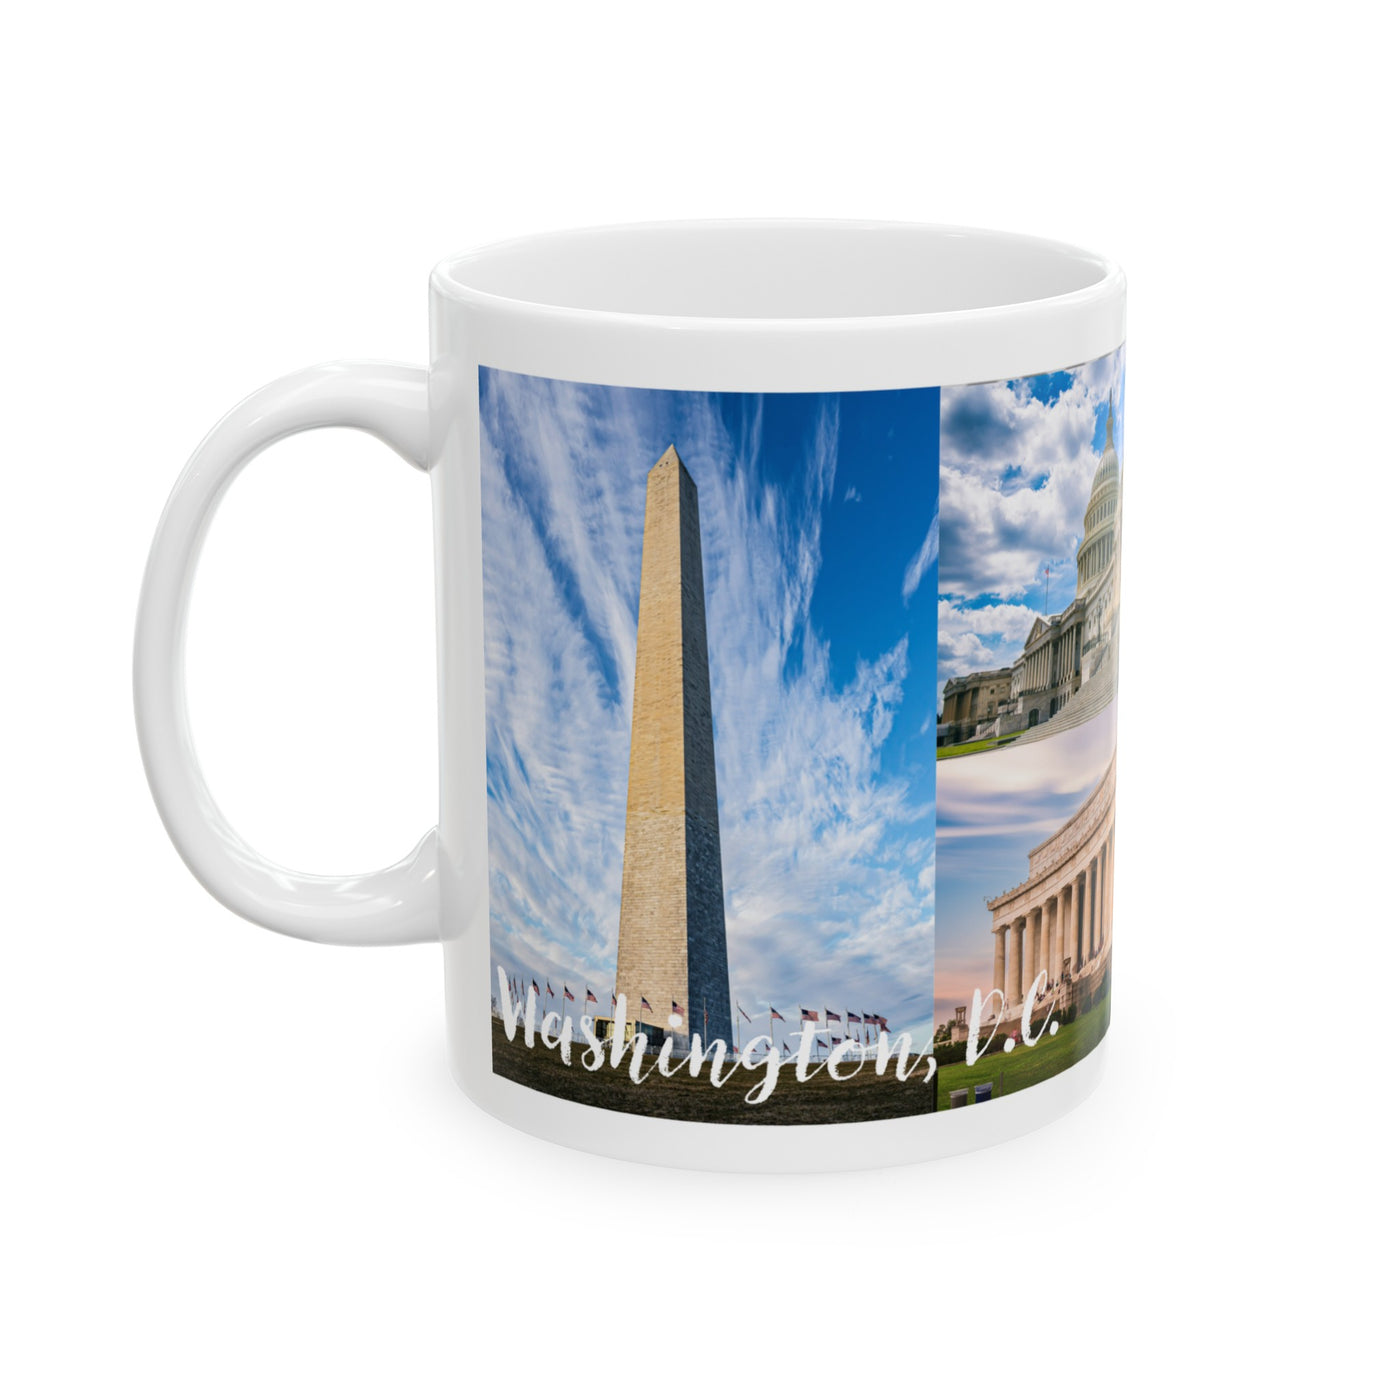 Washington DC Monuments - Ceramic Mug 11oz